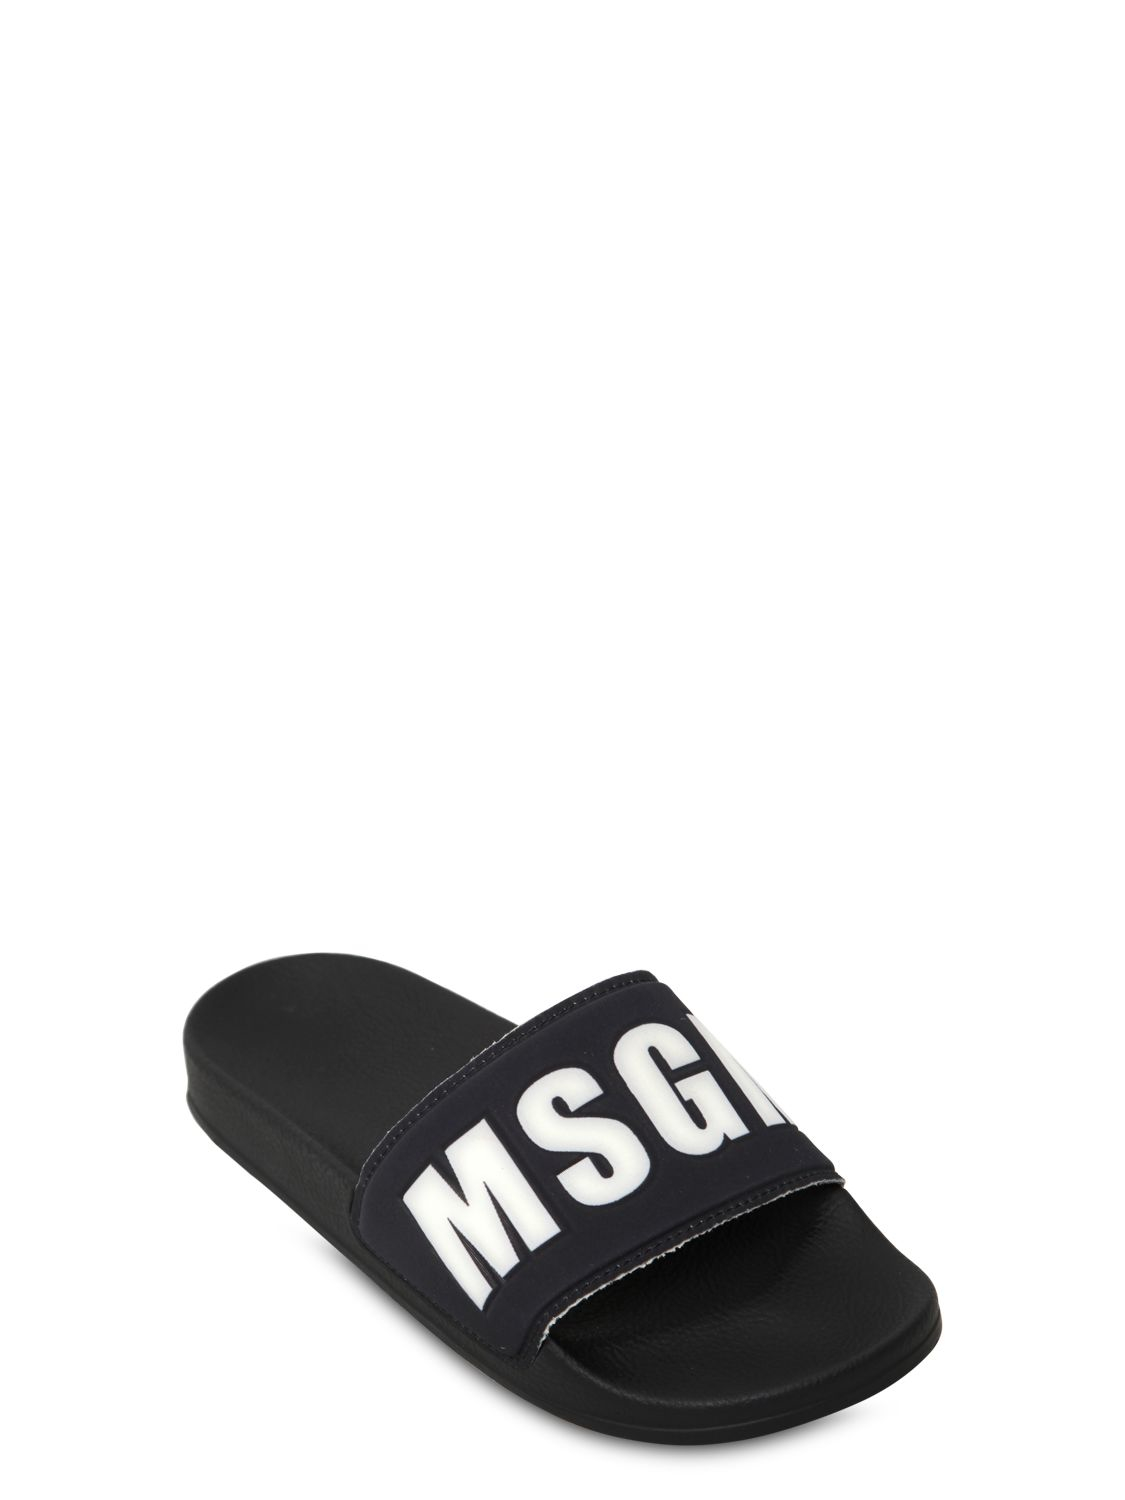 msgm flip flops cheap online